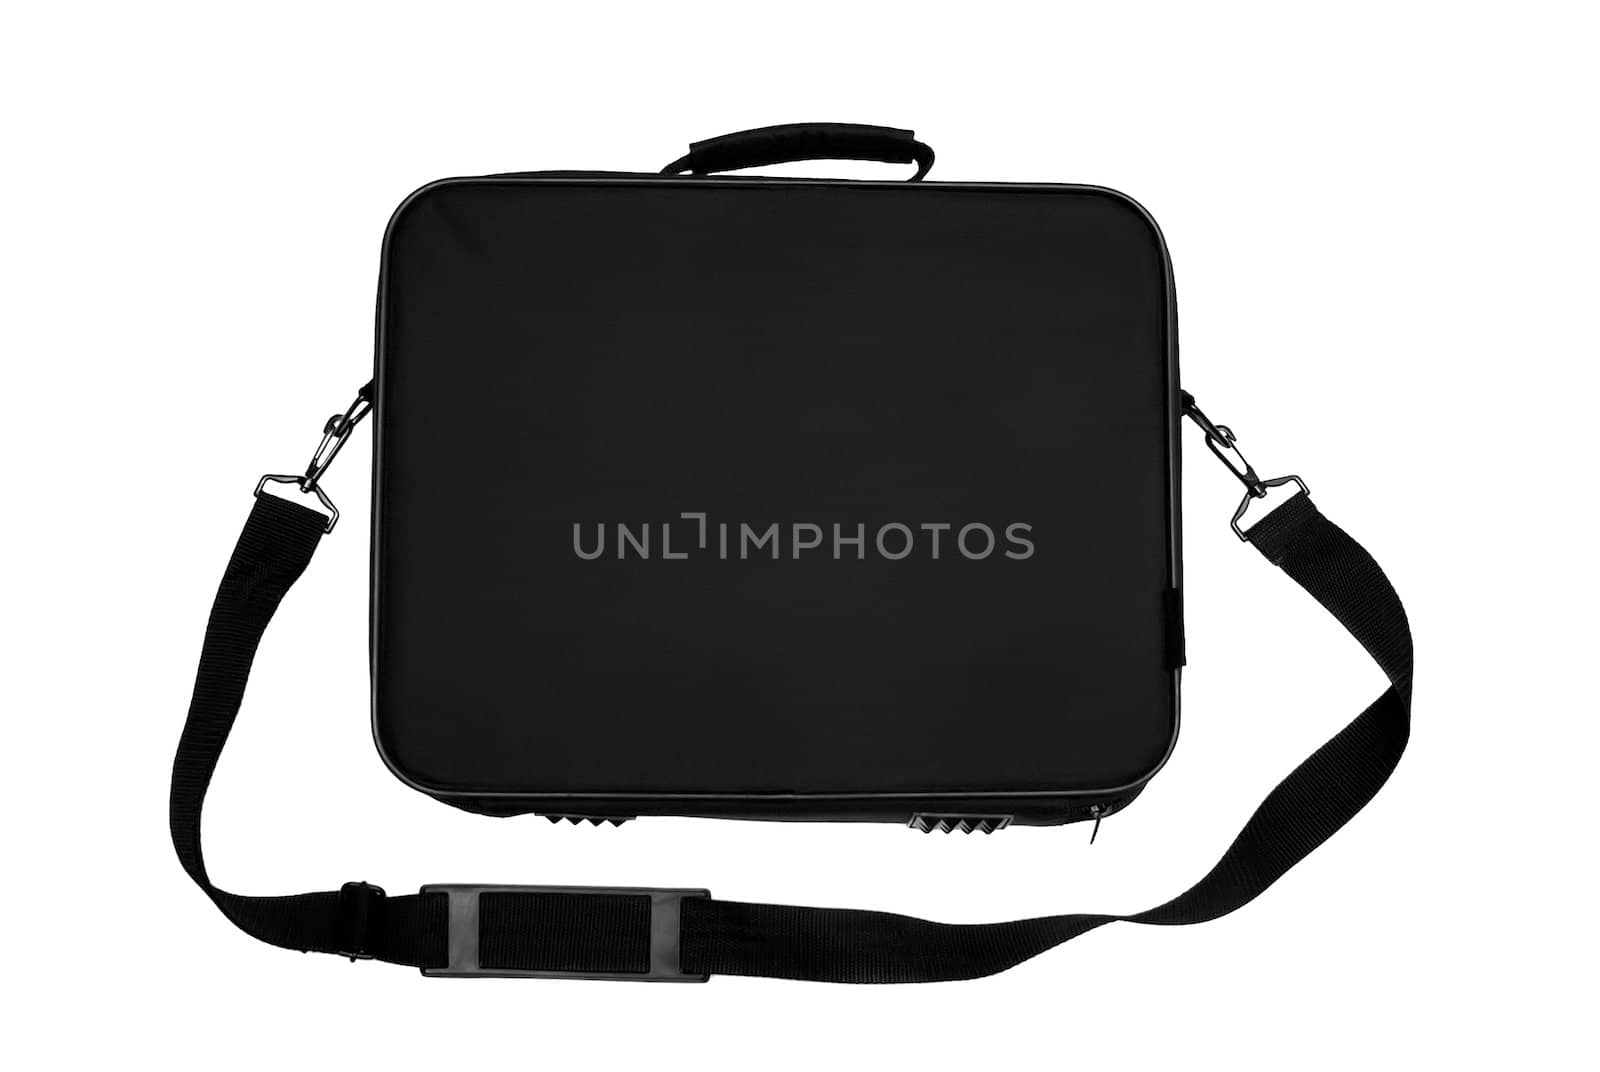 Black Nylon Laptop Carrying Case by Nickondr